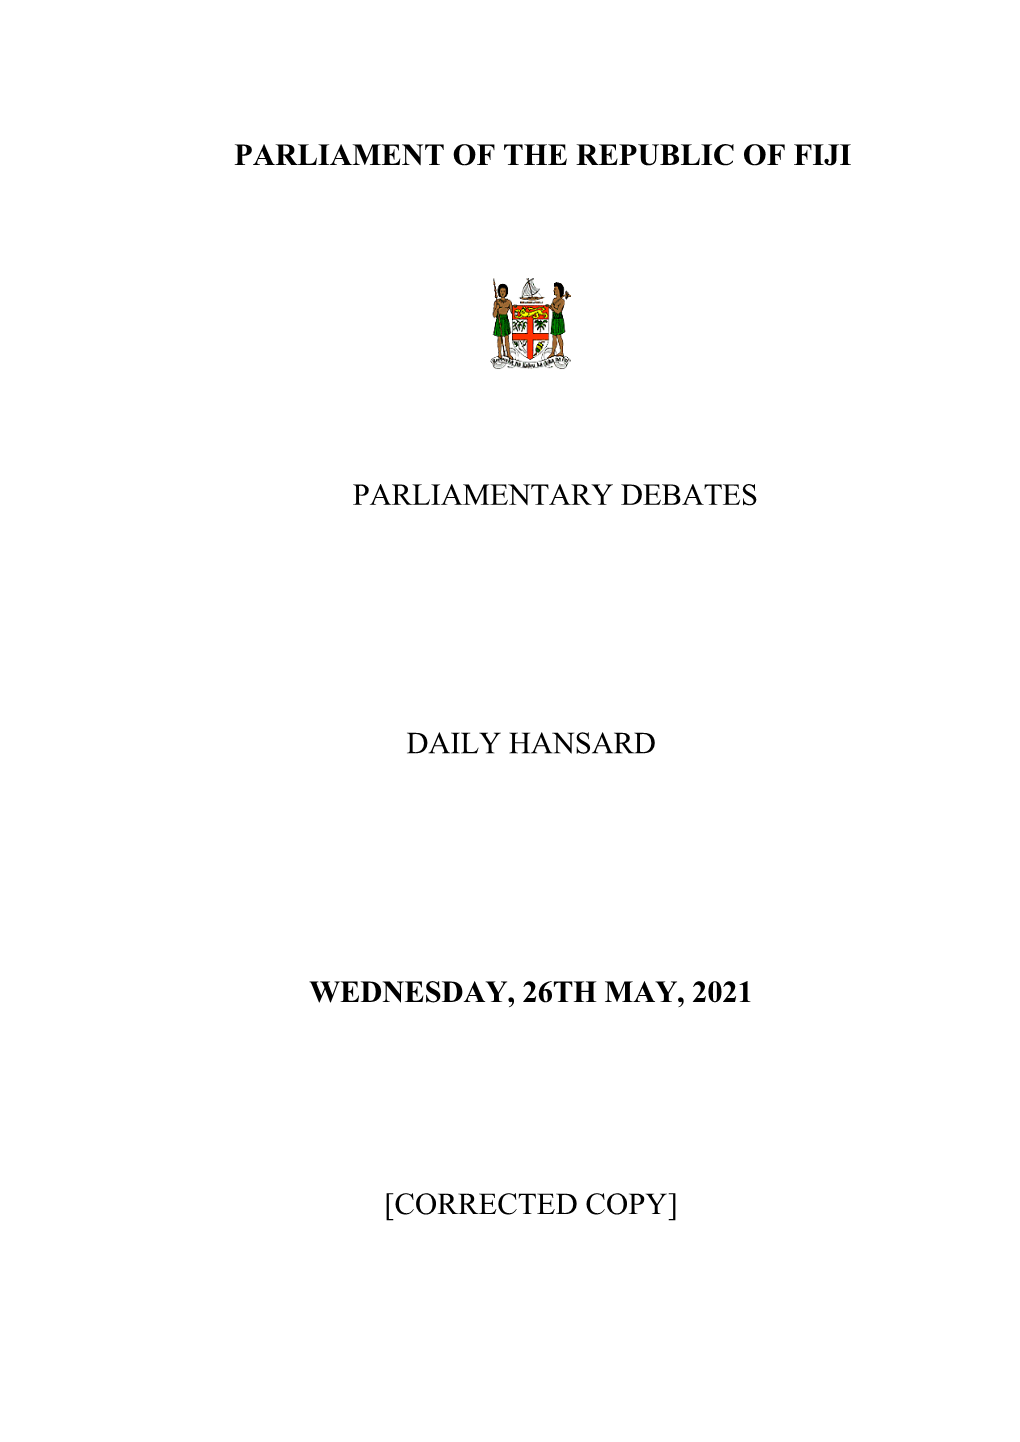 Parliament of the Republic of Fiji Parliamentary Debates Daily Hansard Wednesday, 26Th May, 2021 [Corrected Copy]